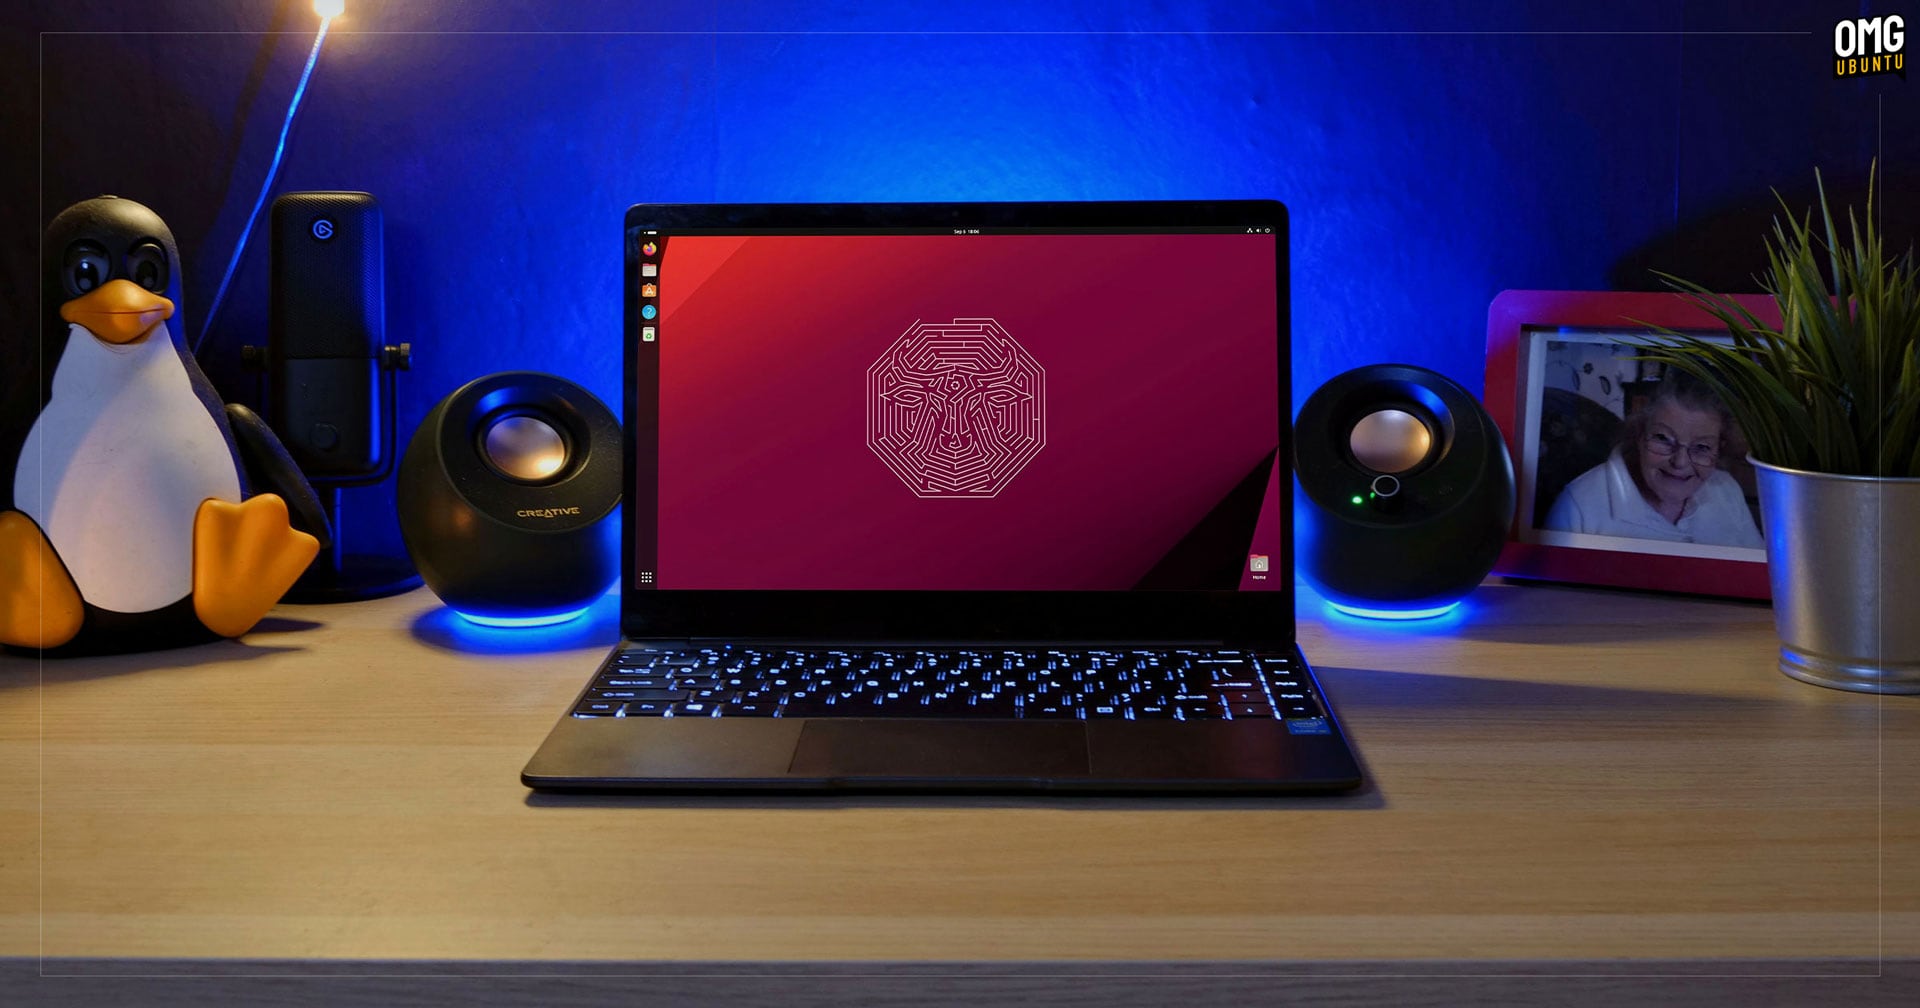 Ubuntu 23.10 is running on a laptop